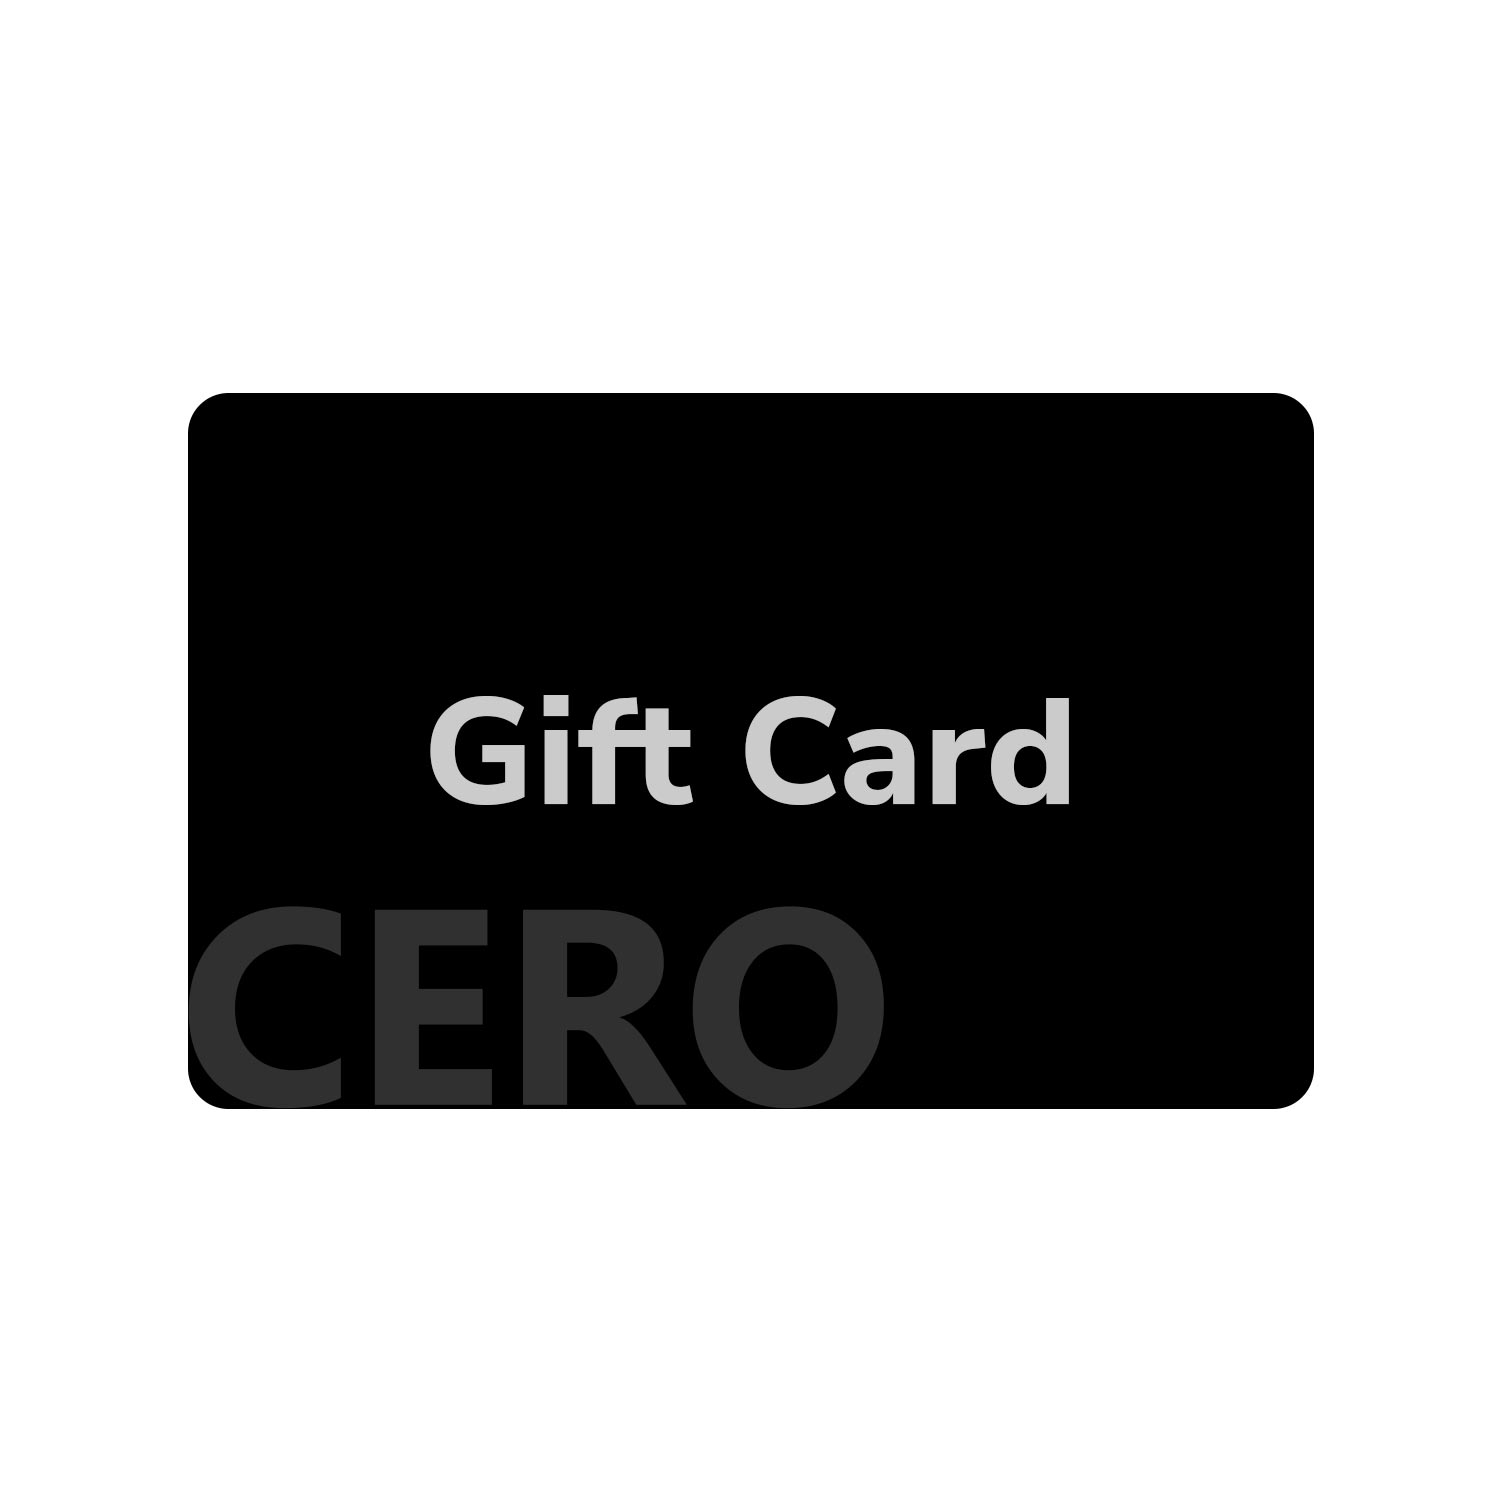 CERO GIFT CARD